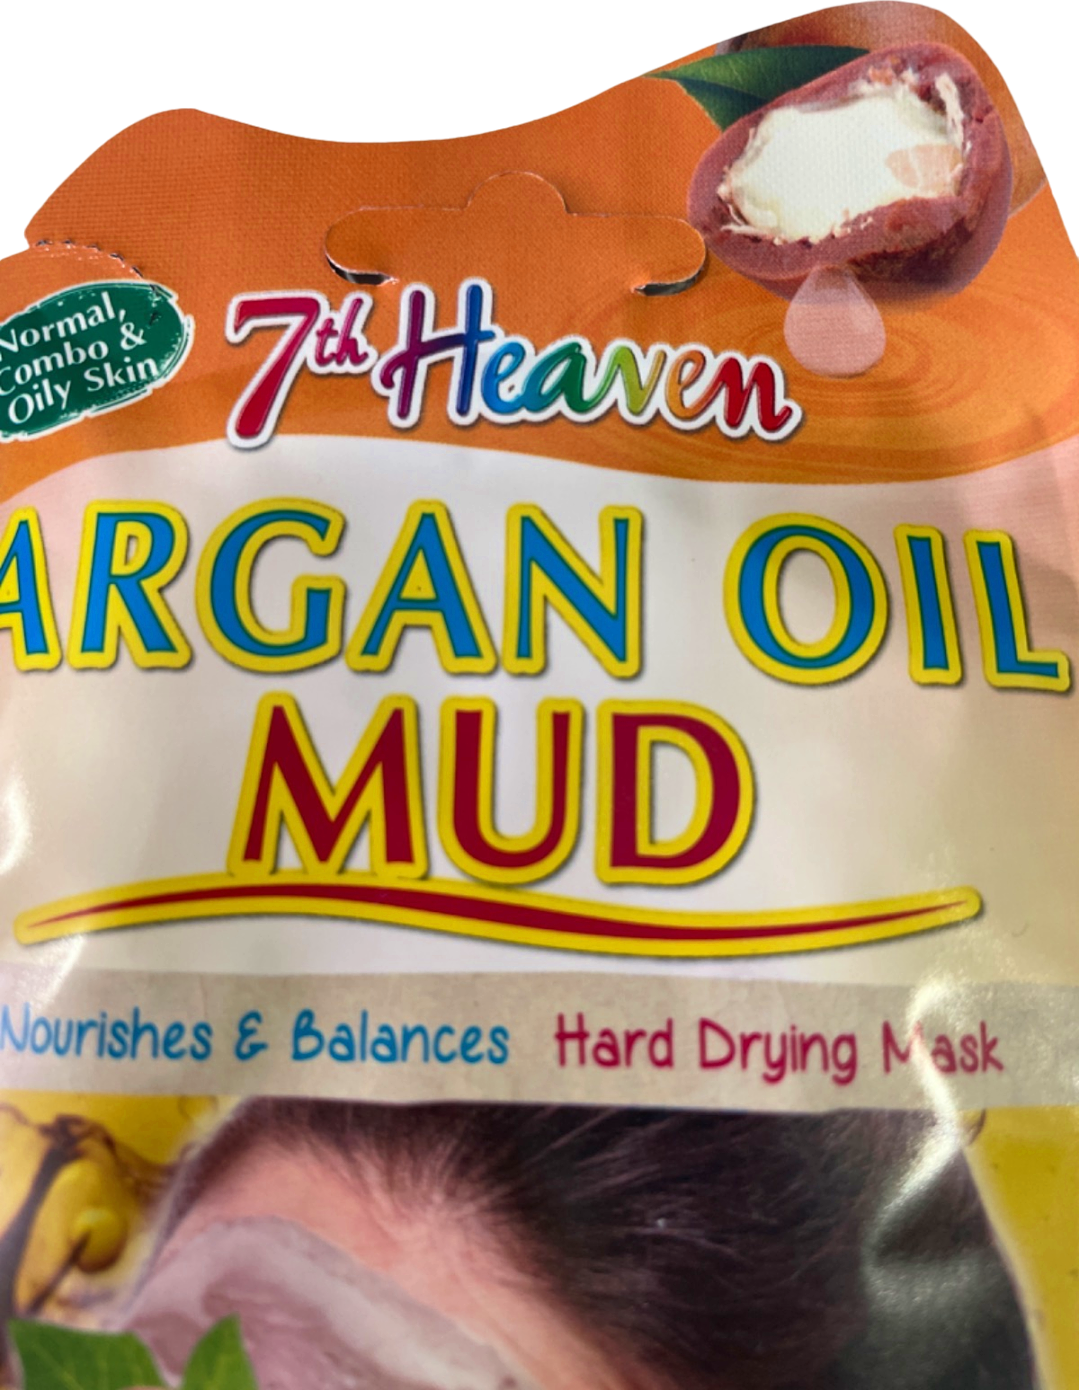 7th Heaven Argan Oil Mud Mask 15g